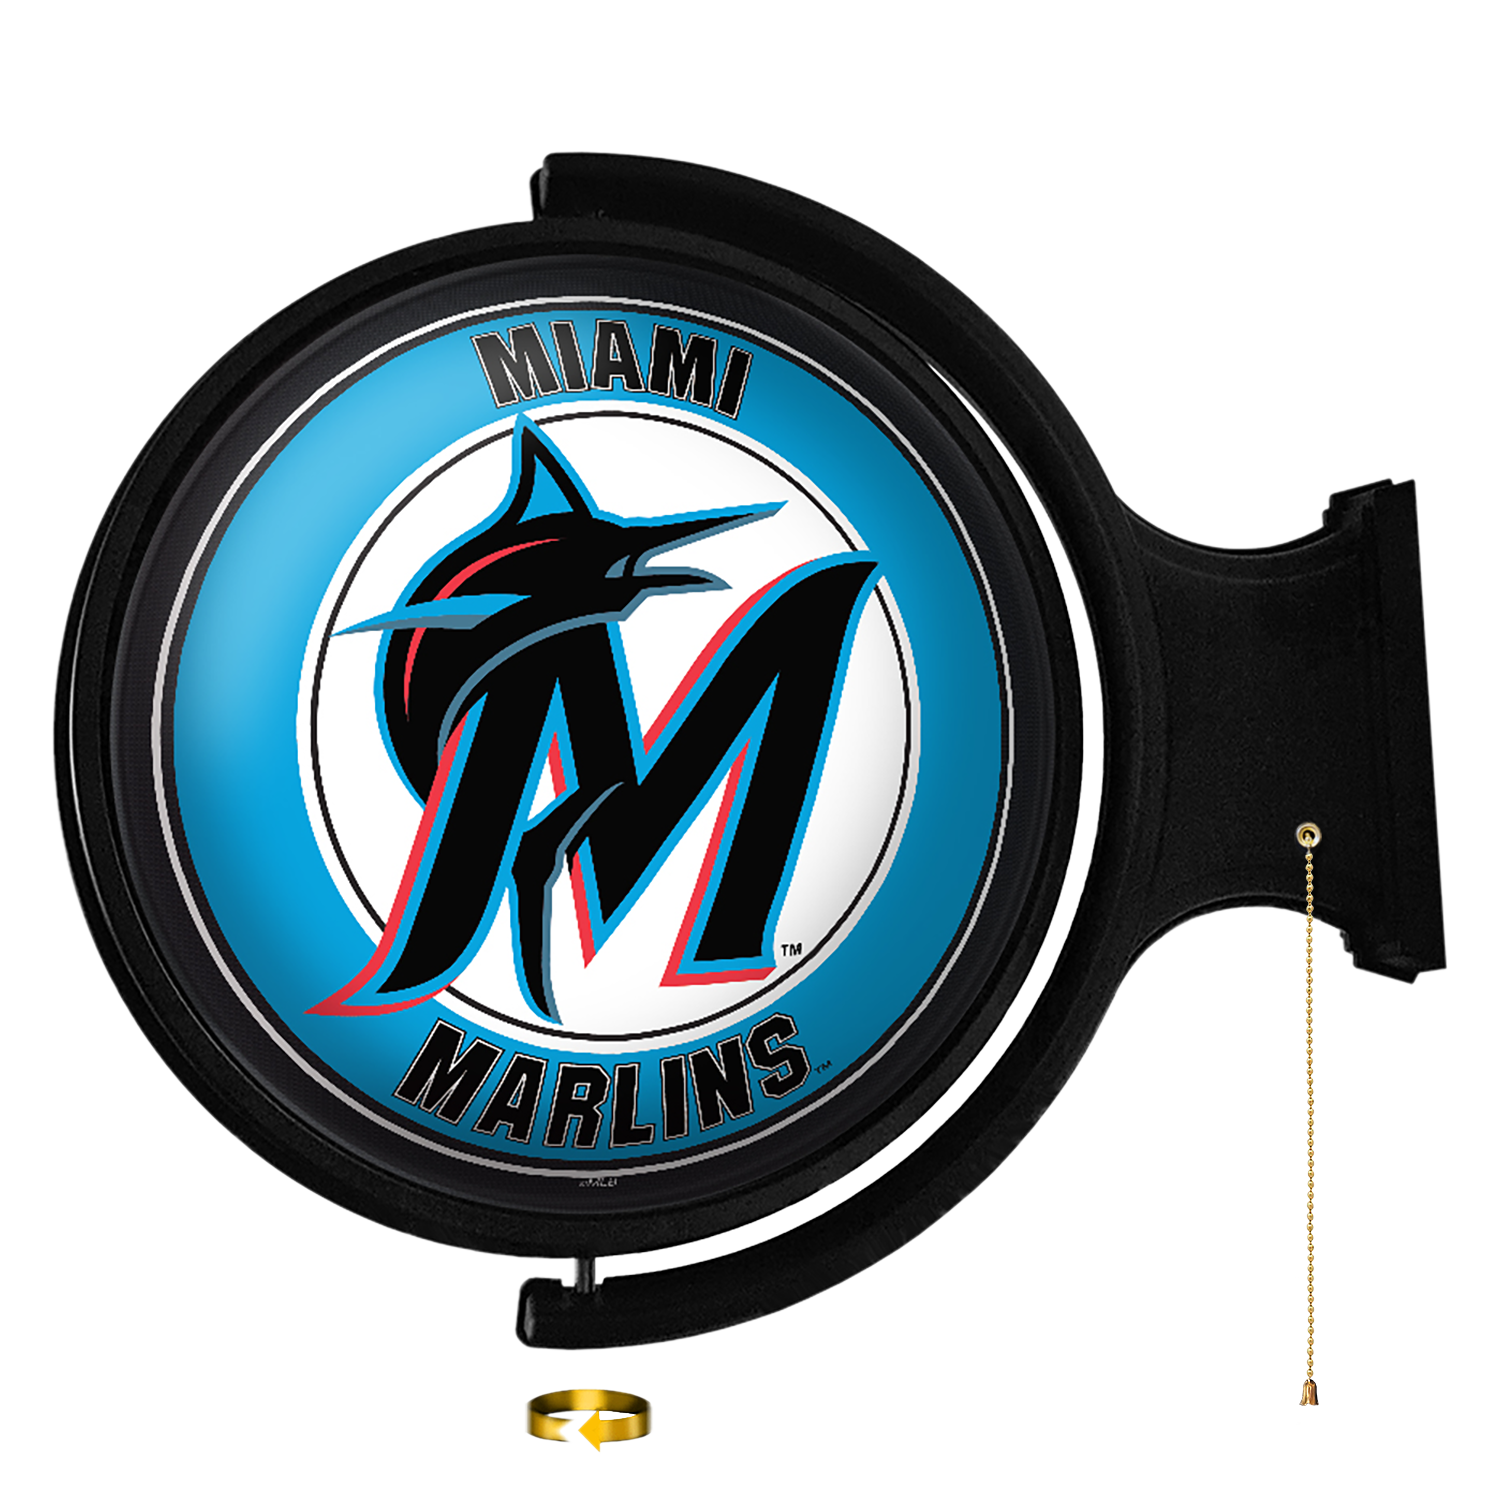 Miami Marlins: Original Round Rotating Lighted Wall Sign